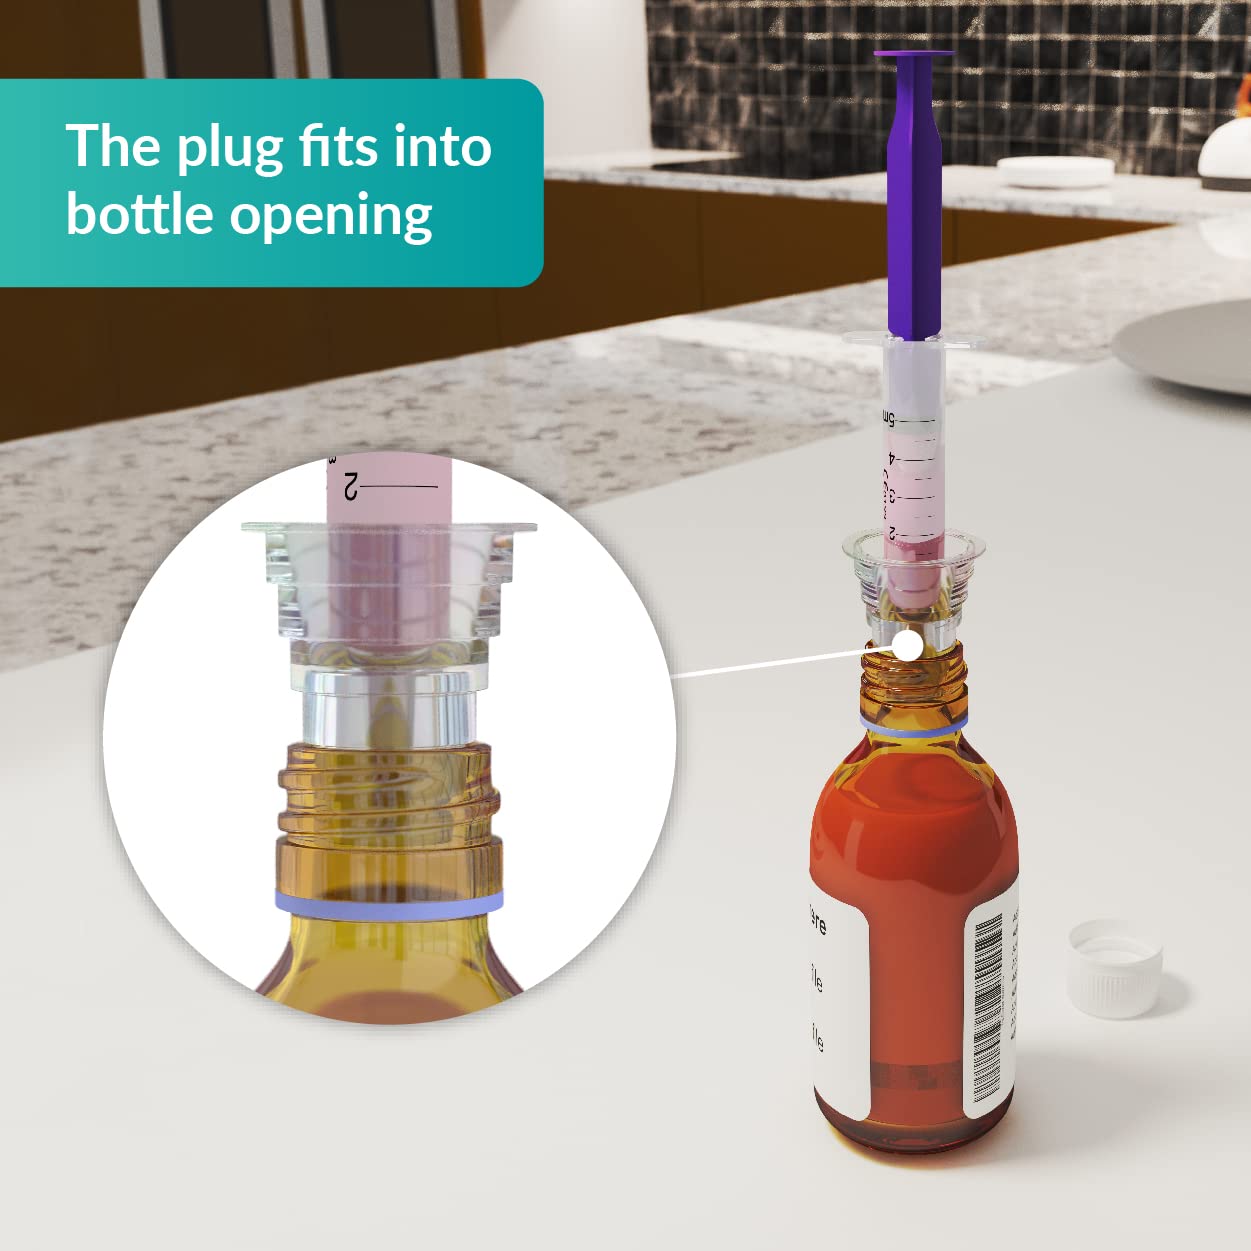 5ml Oral Medicine Syringe and Bottle Plug, Box of 10 - Suitable for Baby, Children, Pets